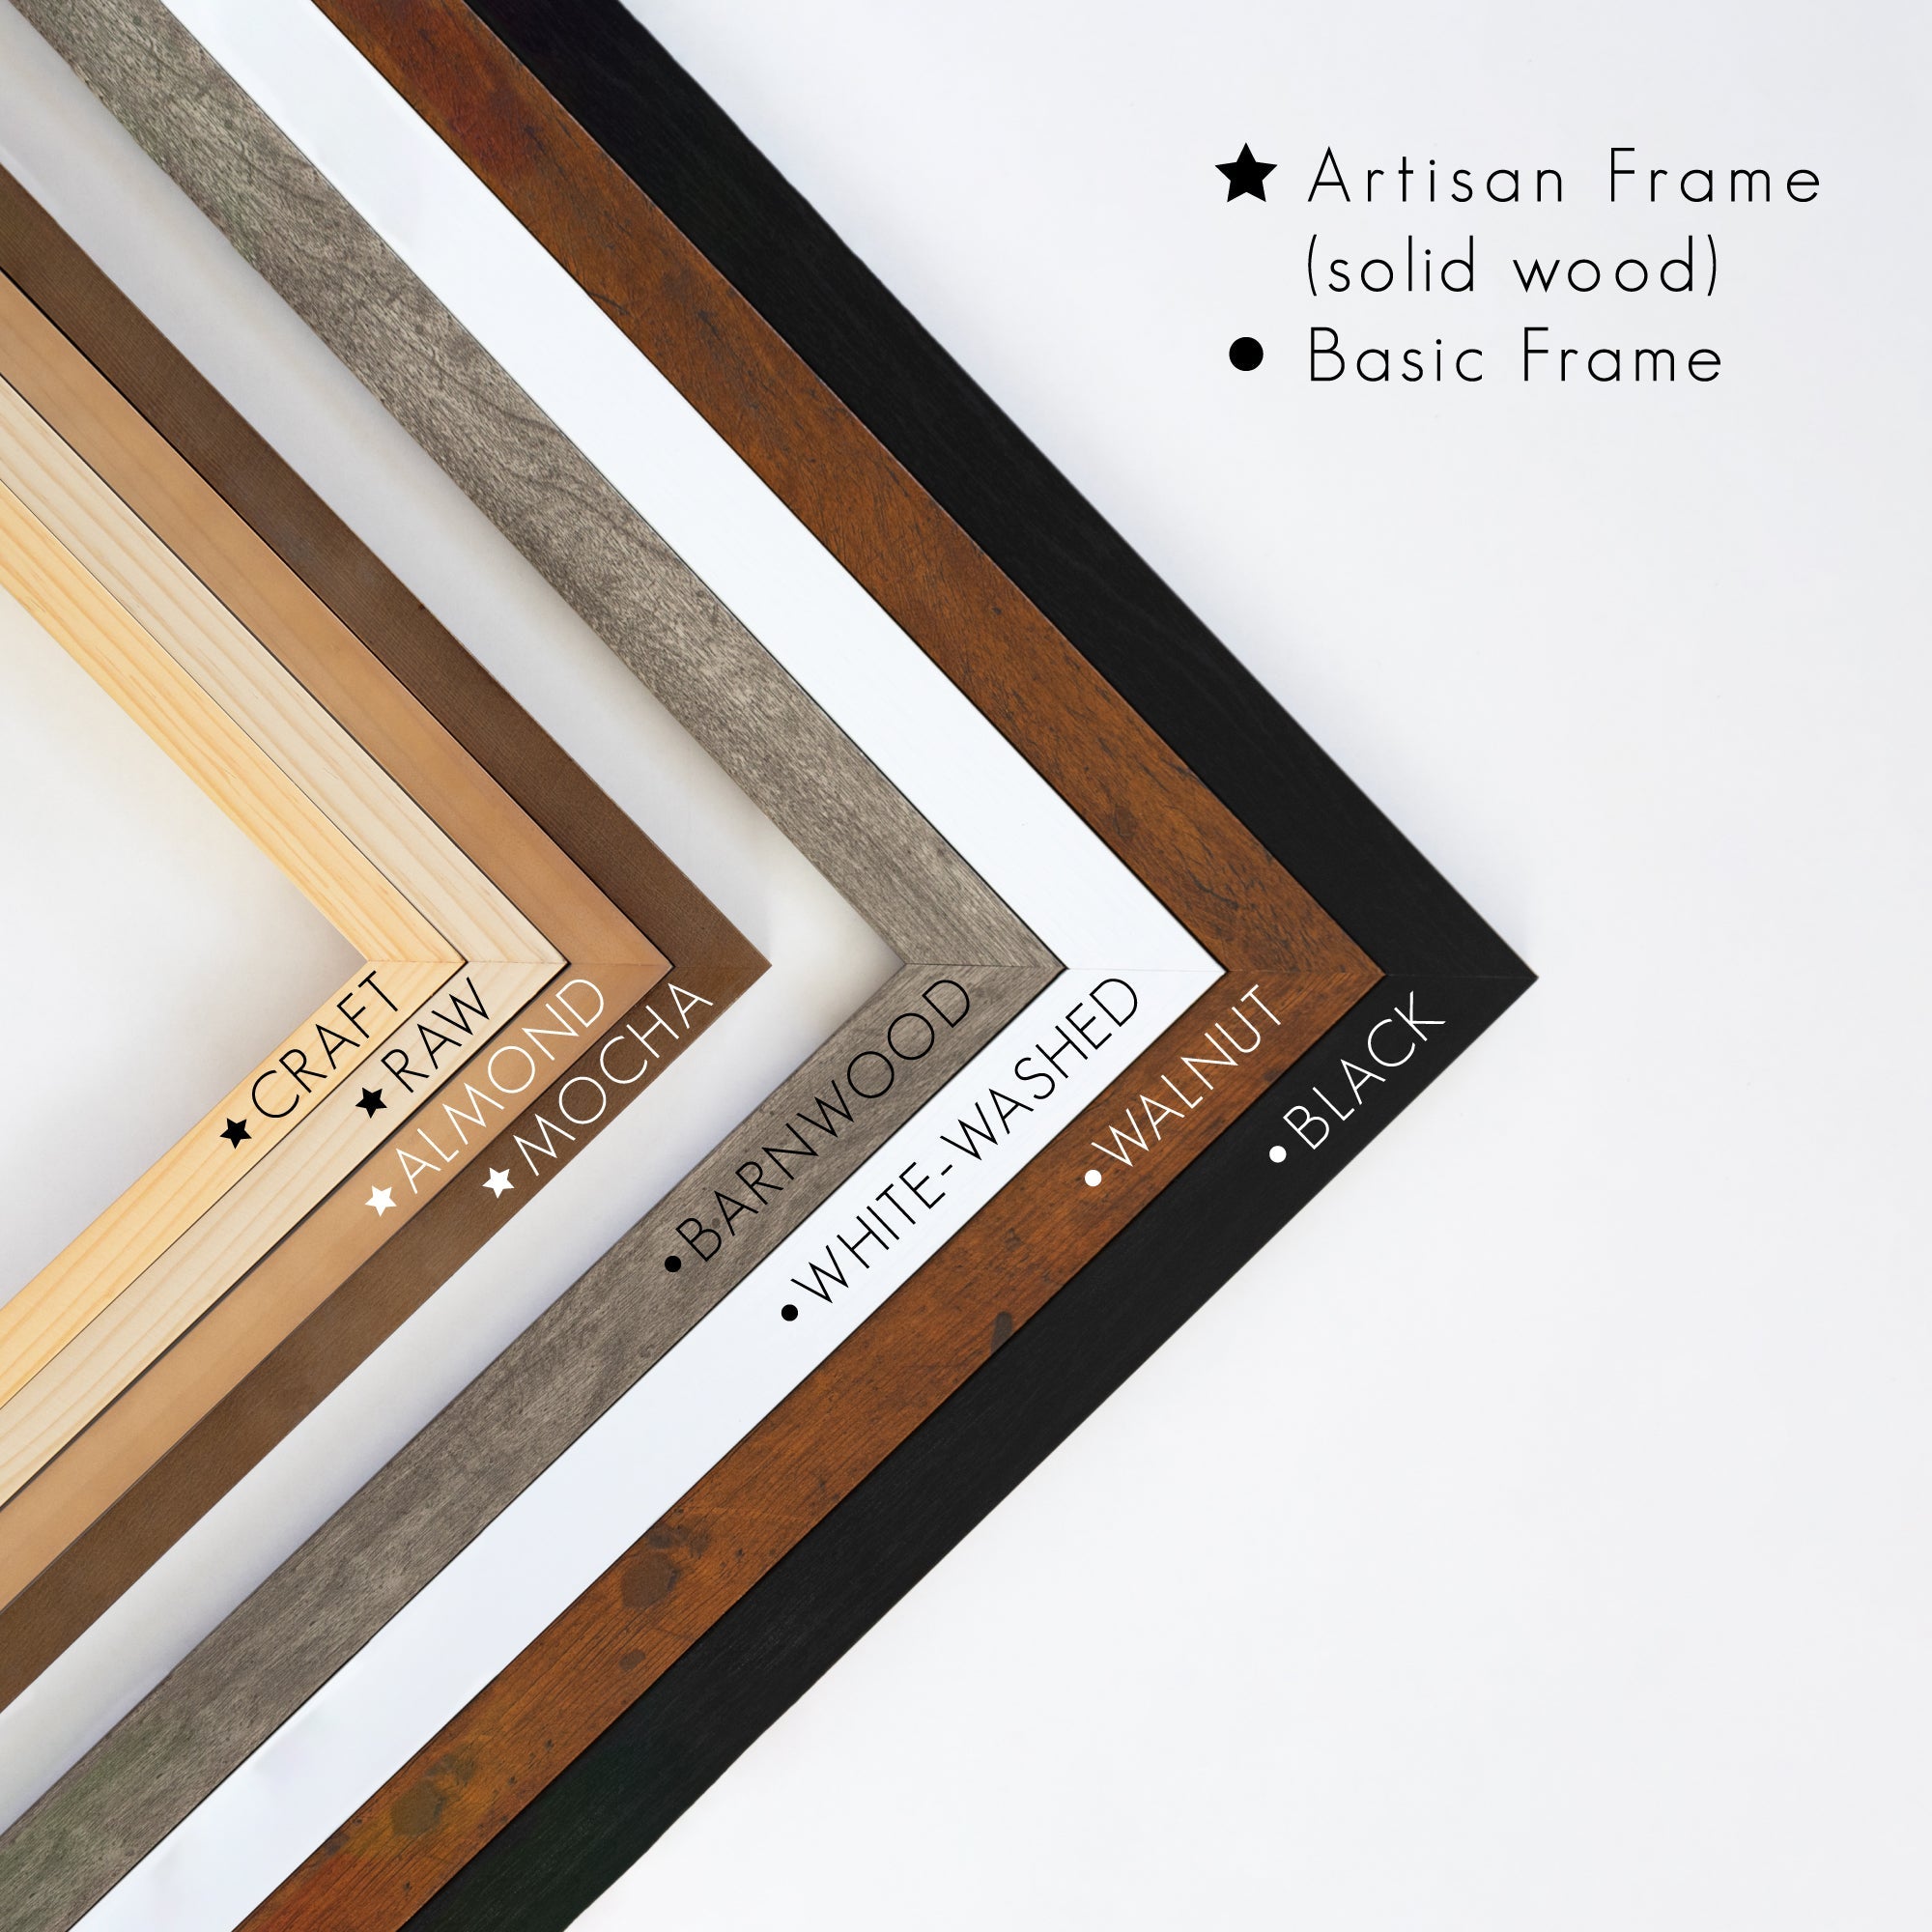 Large Framed Whiteboard | Horizontal Swanson